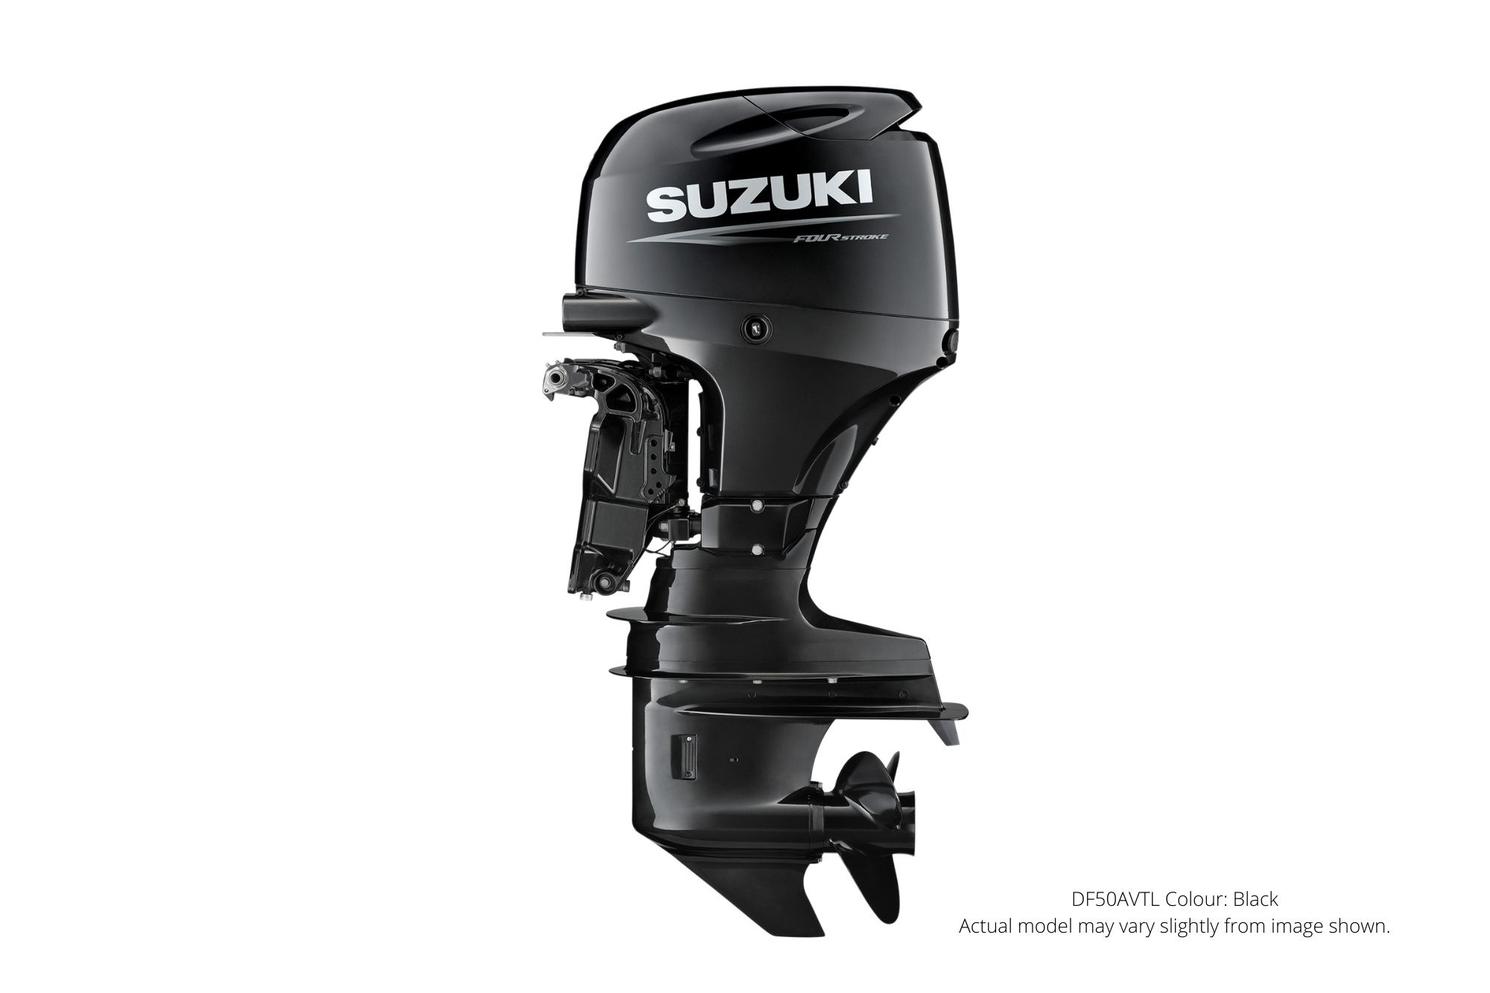 2022 Suzuki DF50AV Black, Electric, 20″ Shaft Length, Remote, Power Tilt and Trim, High Energy Rotation